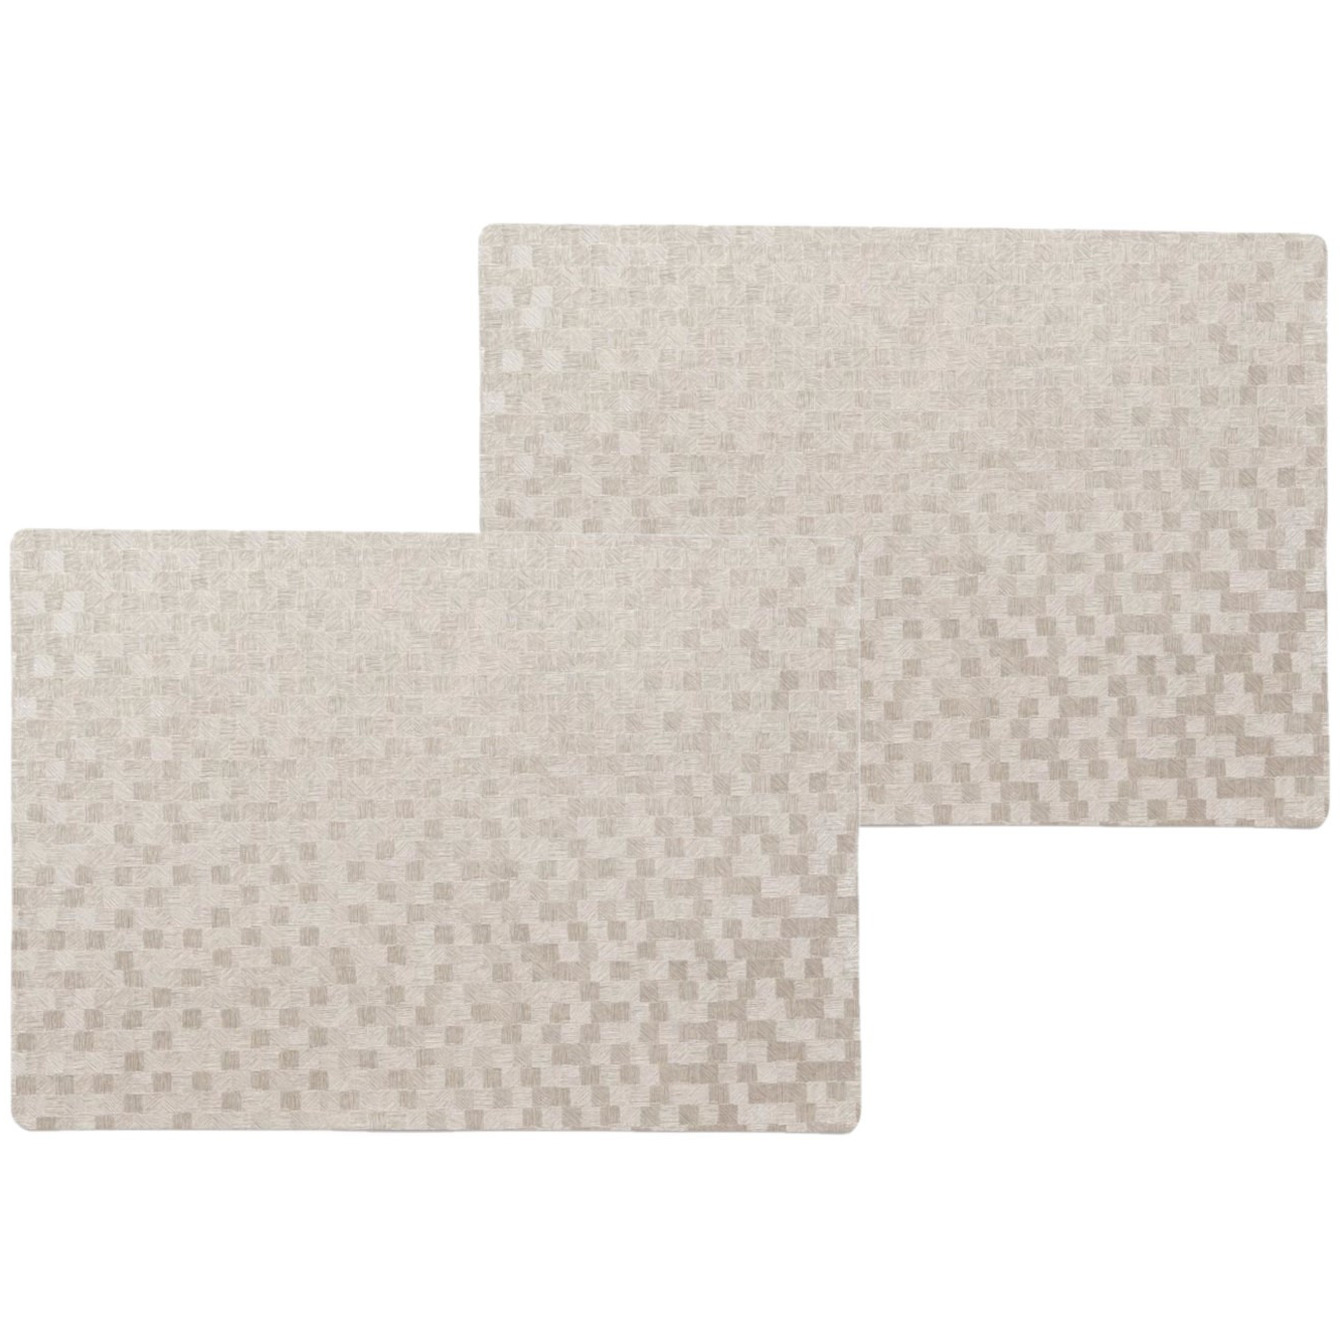 Wicotex 8x stuks stevige luxe Tafel placemats Stones taupe 30 x 43 cm -